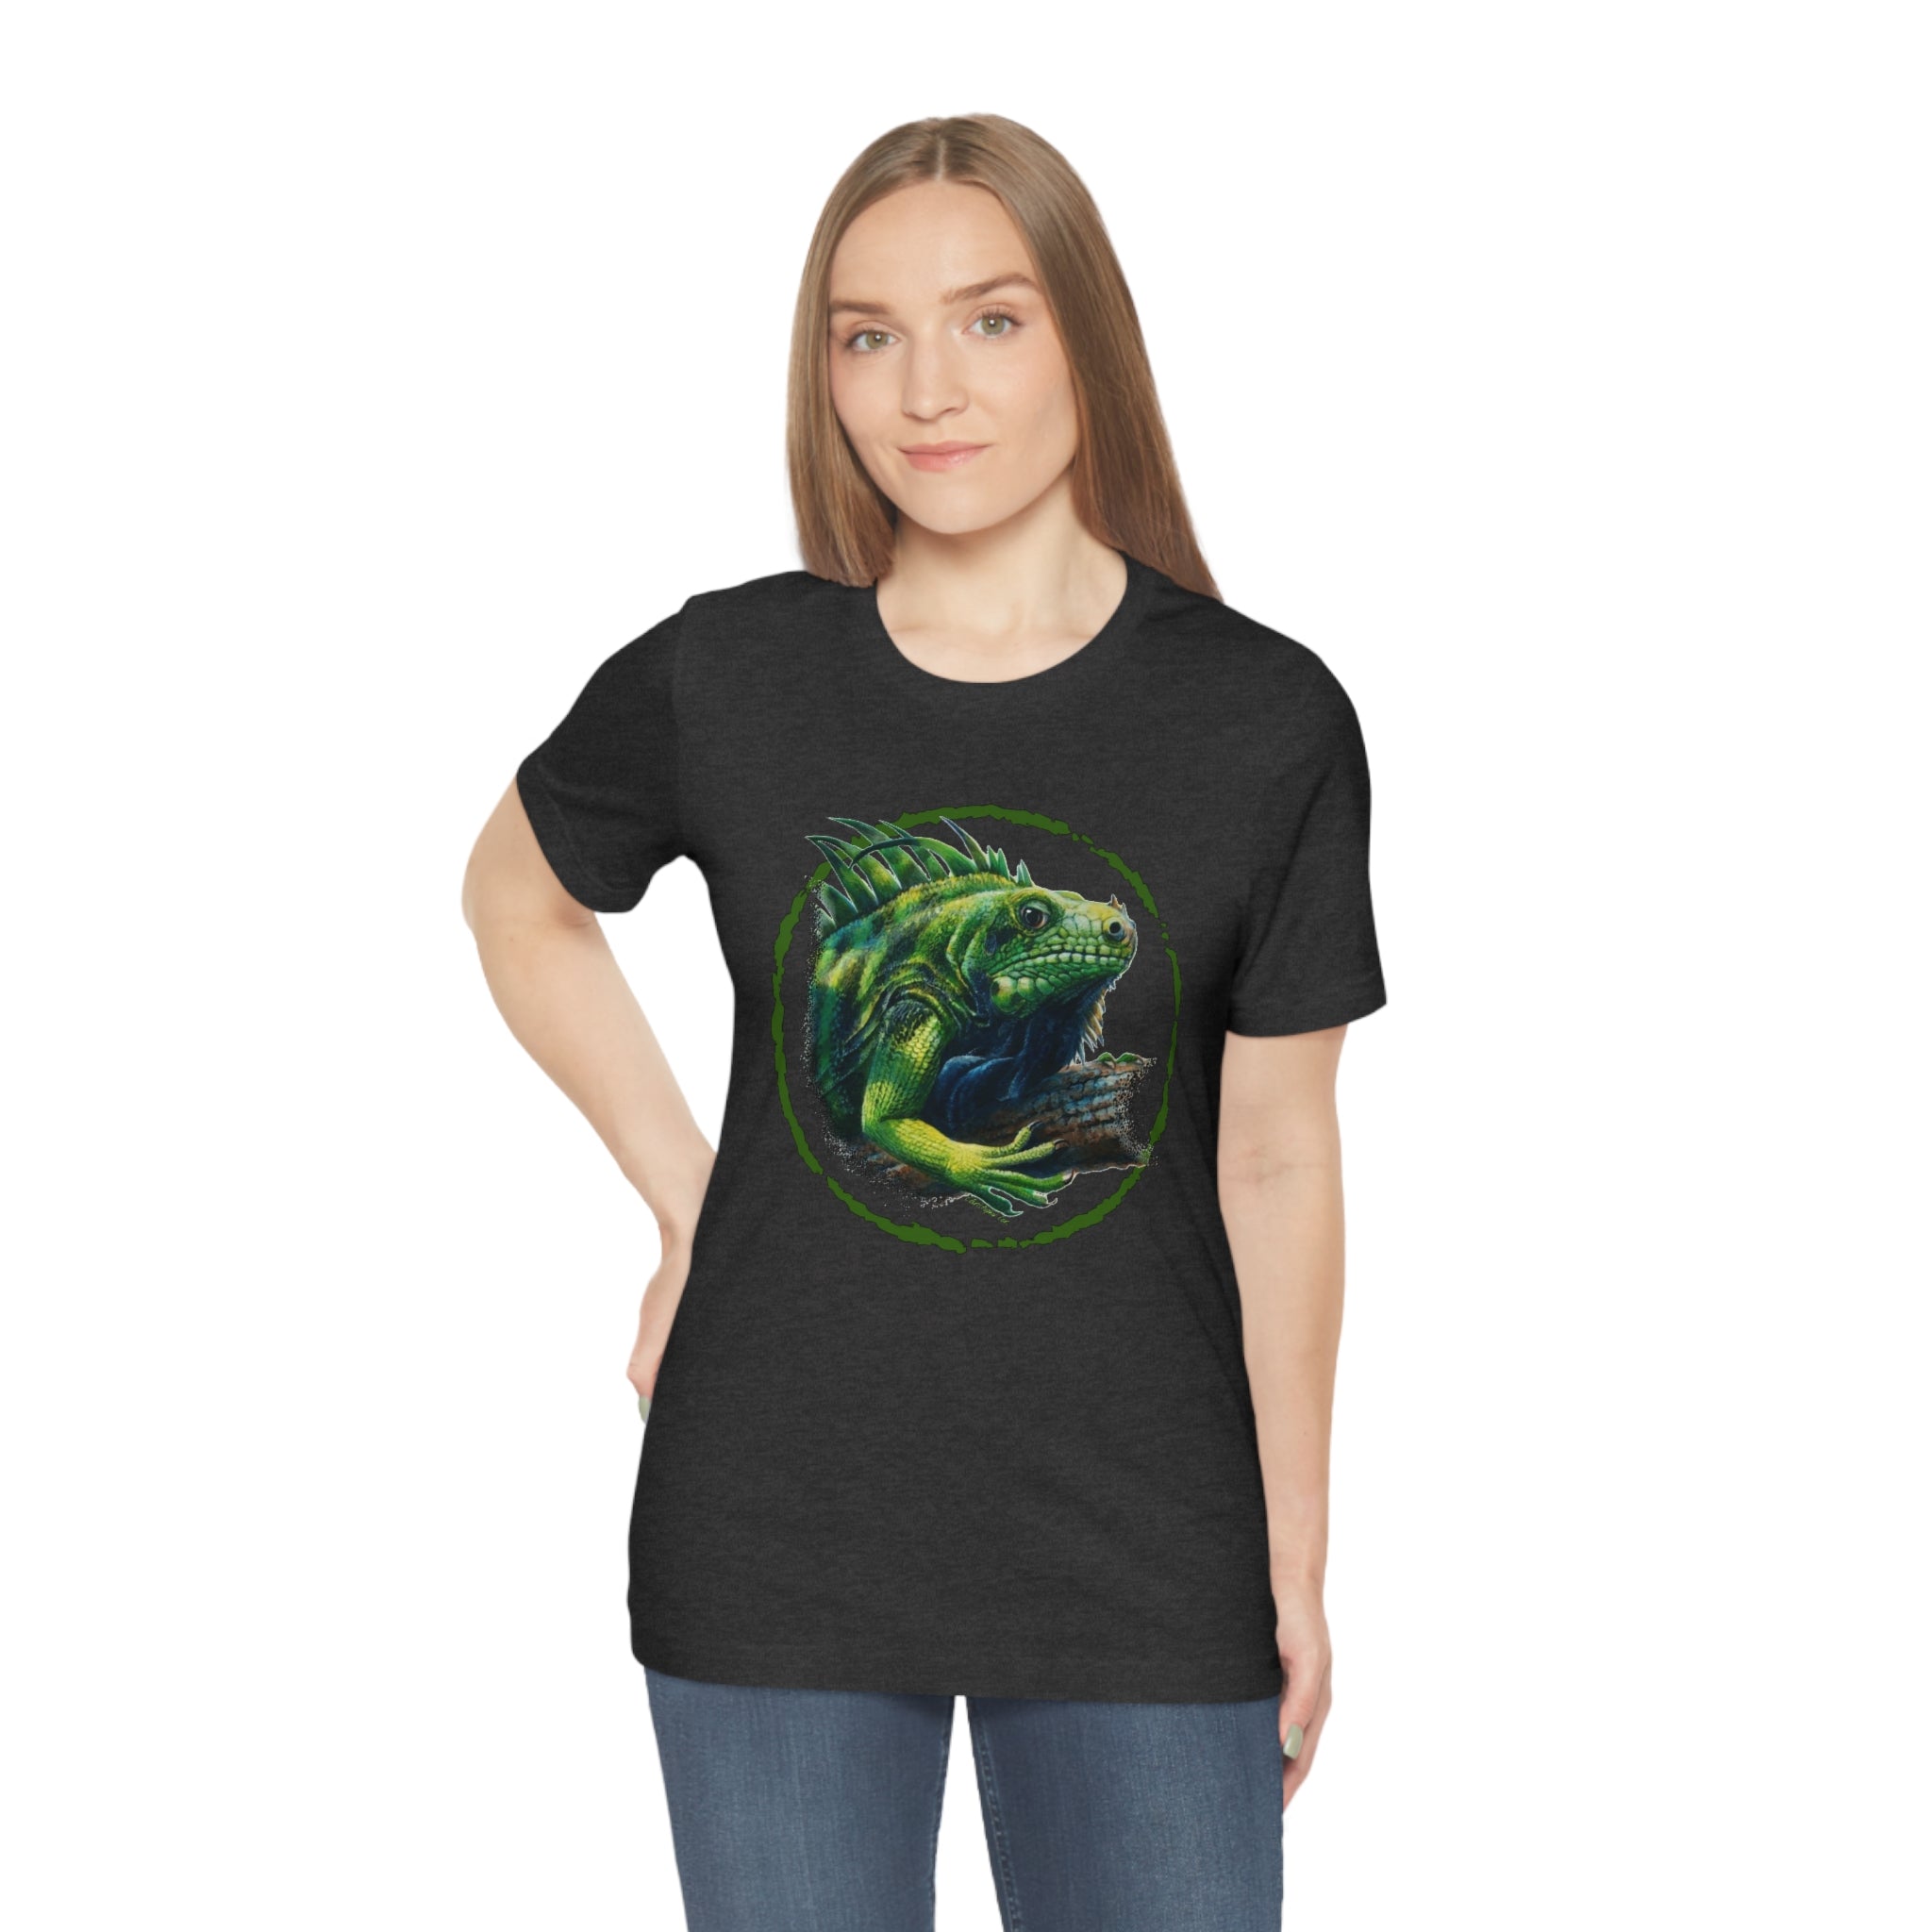 Iguana Unisex Tee, St Lucia Iguana shirt, Reptile shirts, Men's tees, Wearable art